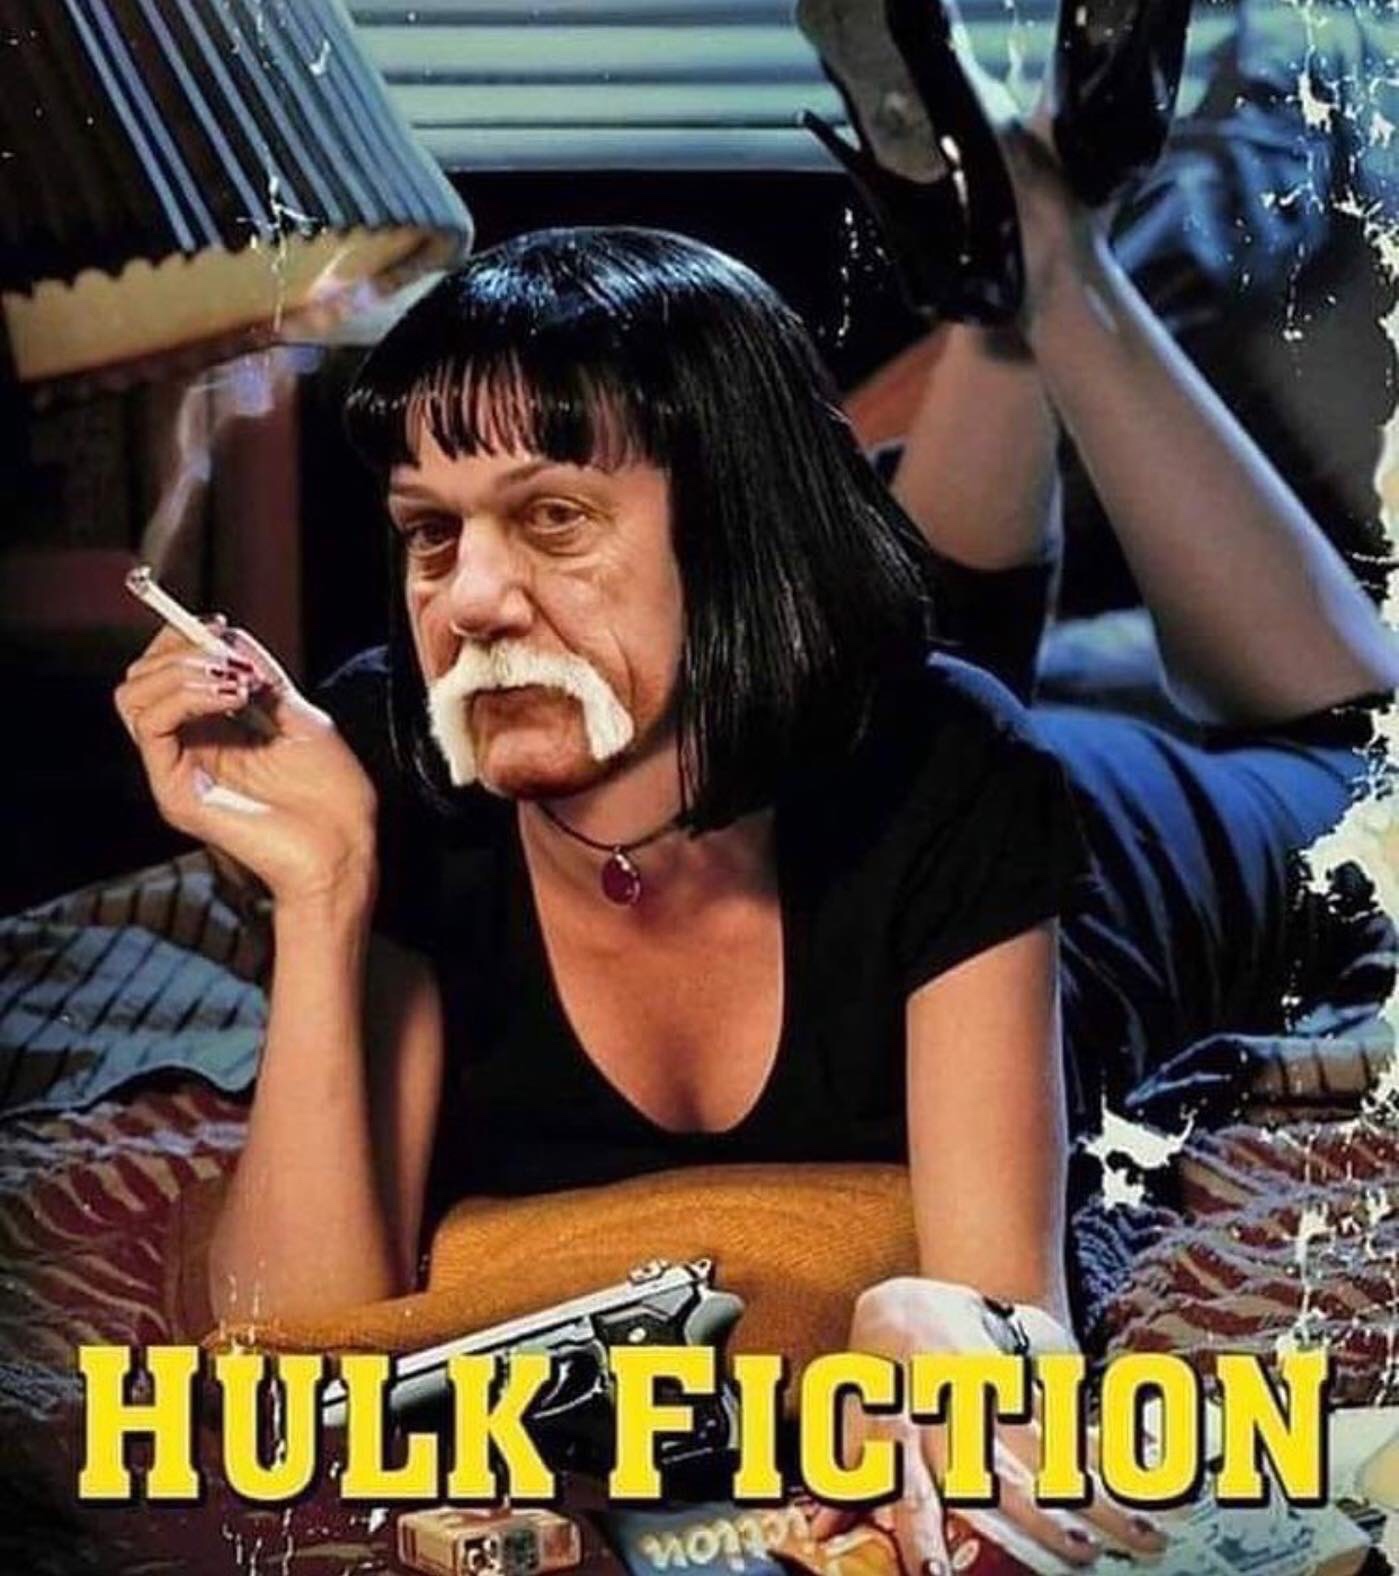 pulp fiction lockscreen - Hulk Fiction